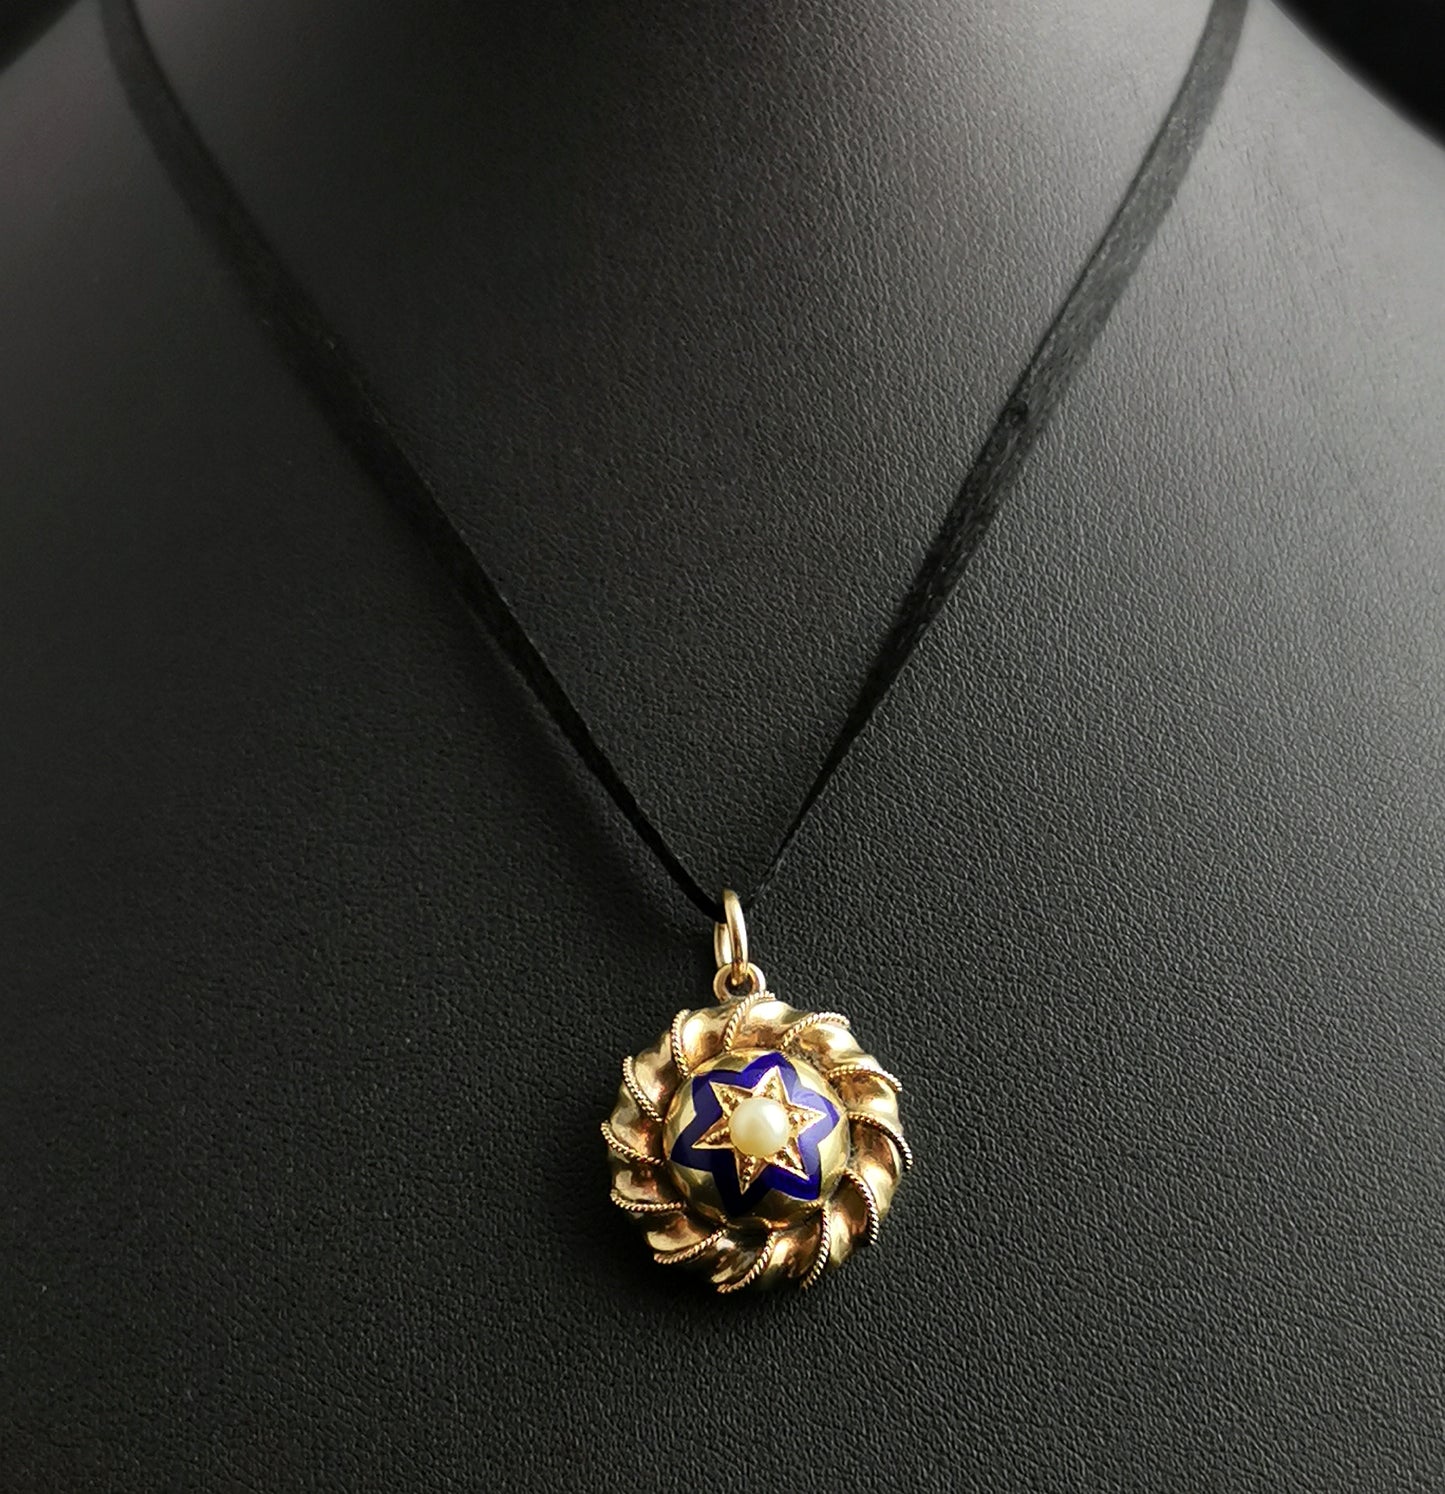 Victorian gold, blue enamel and split pearl star locket, pendant